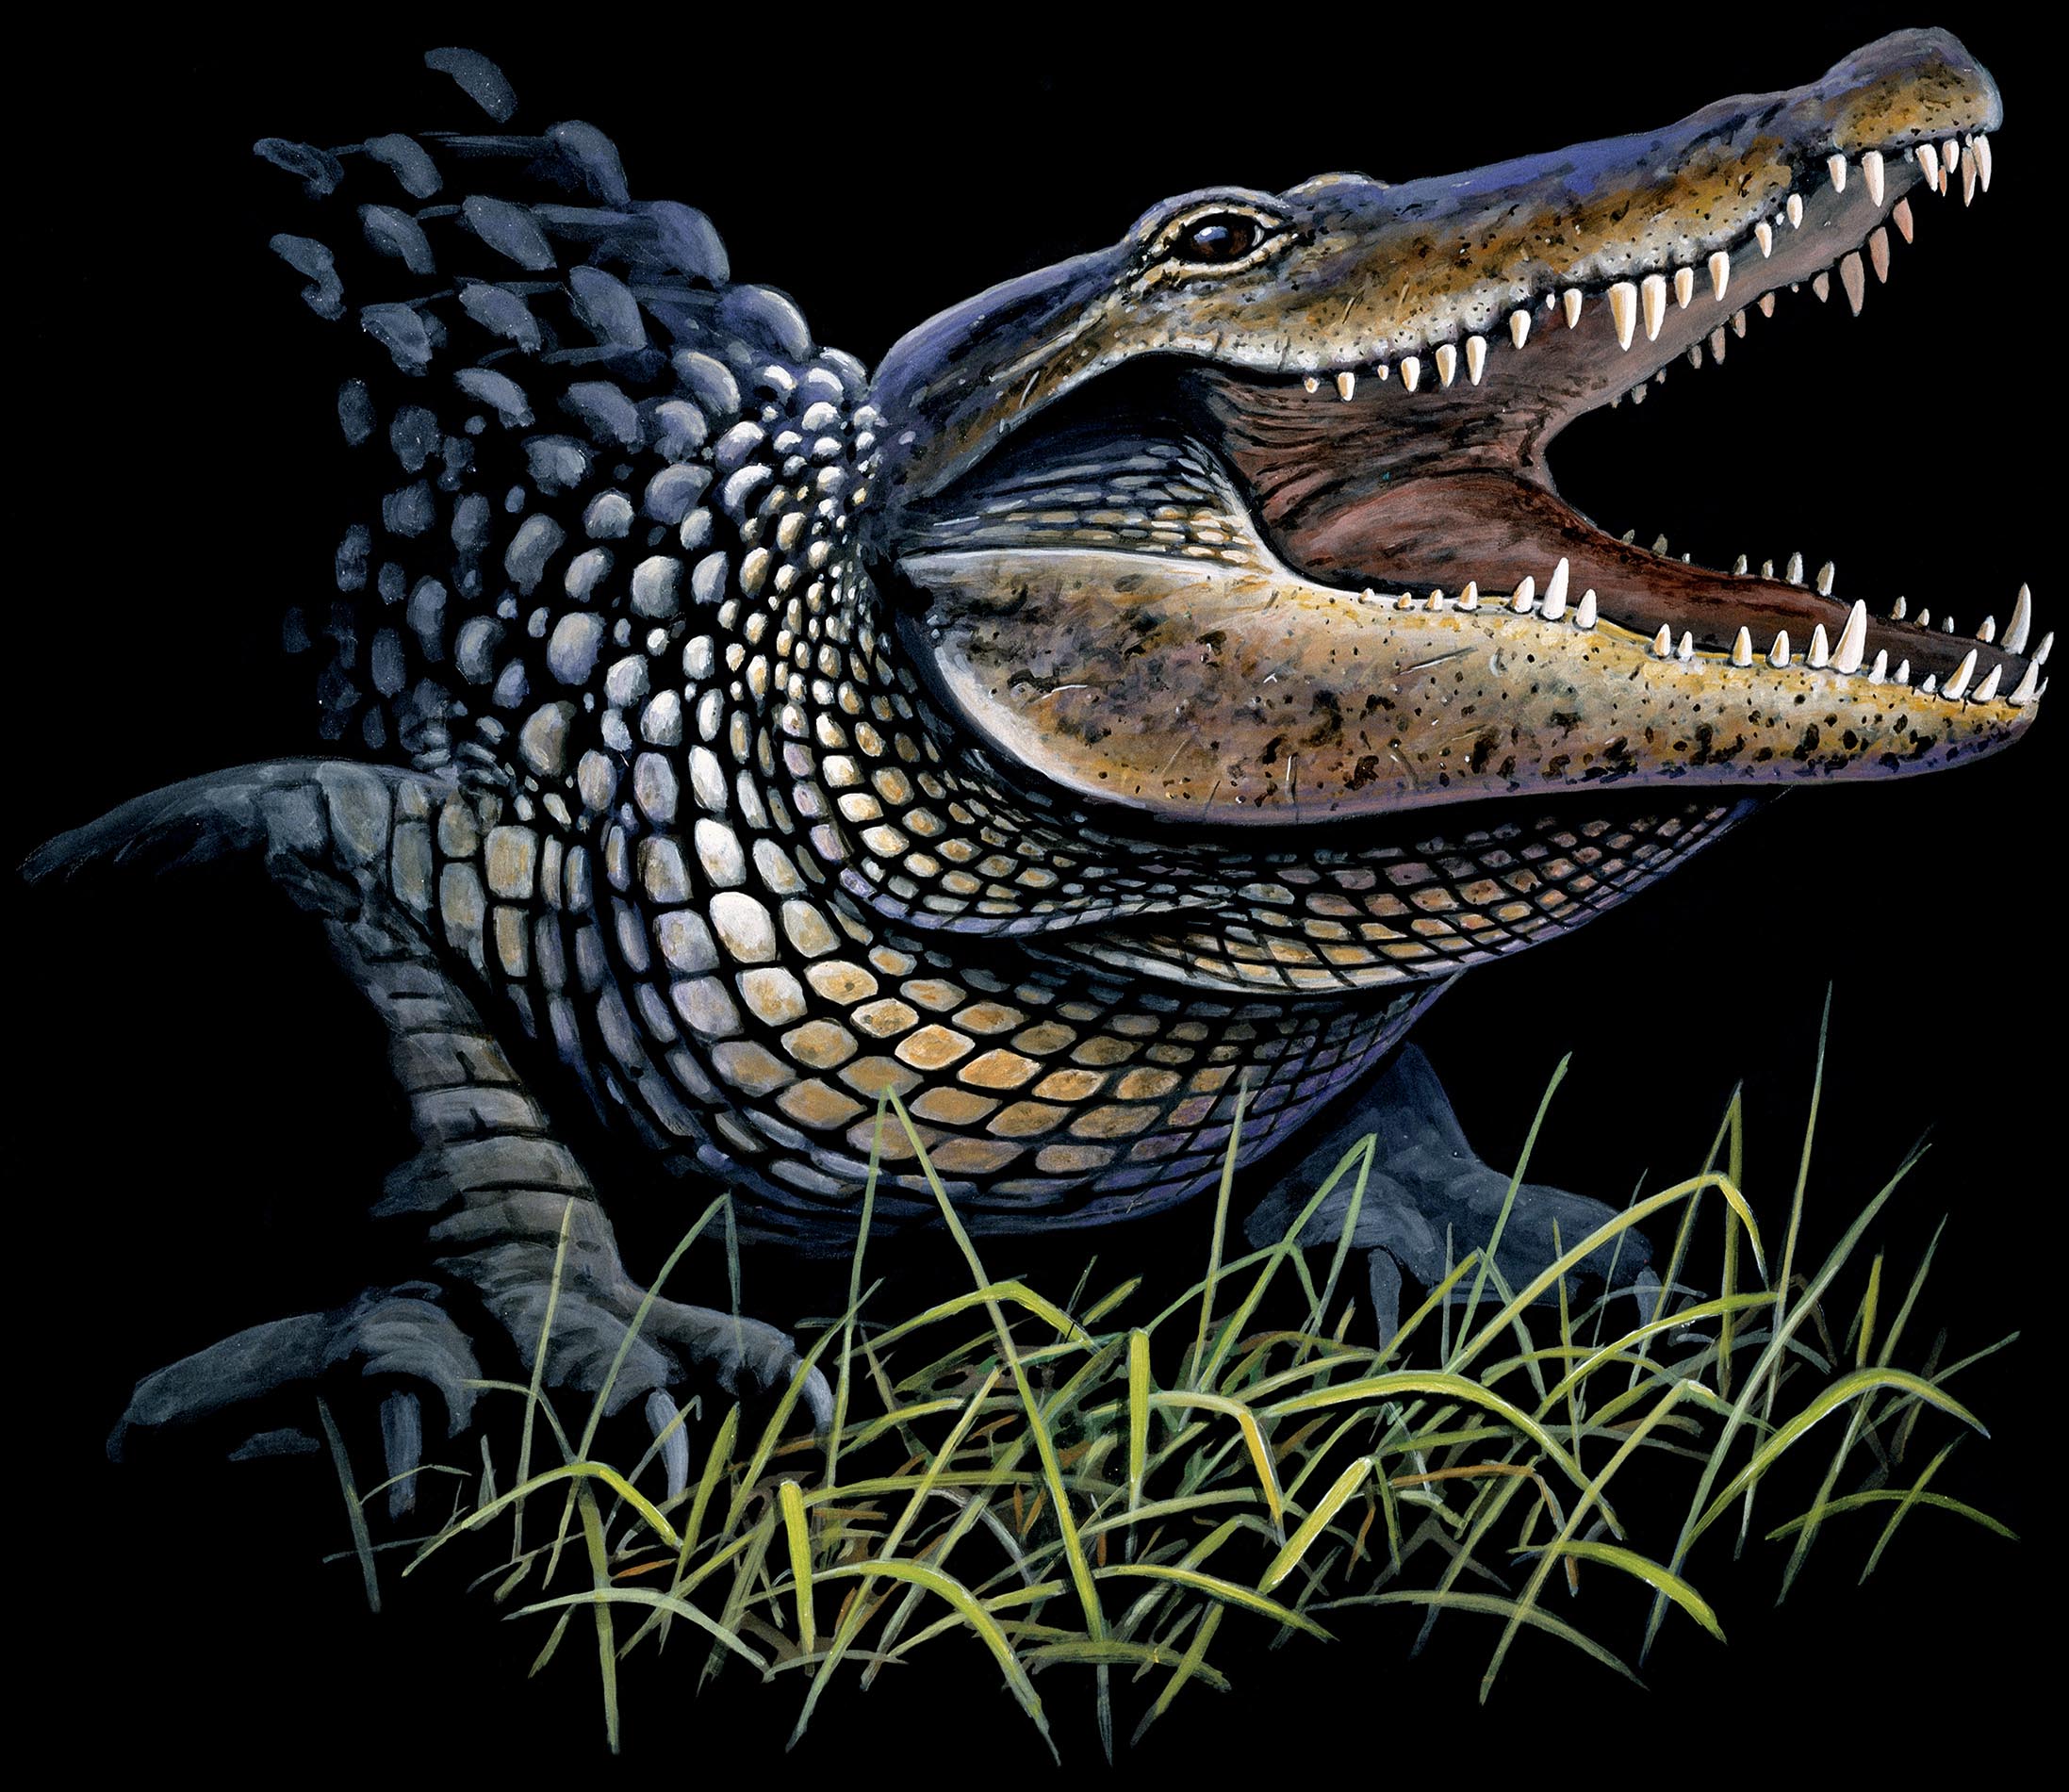 ABH – 4Animals, Black, Alligator 00066 © Art Brands Holdings, LLC